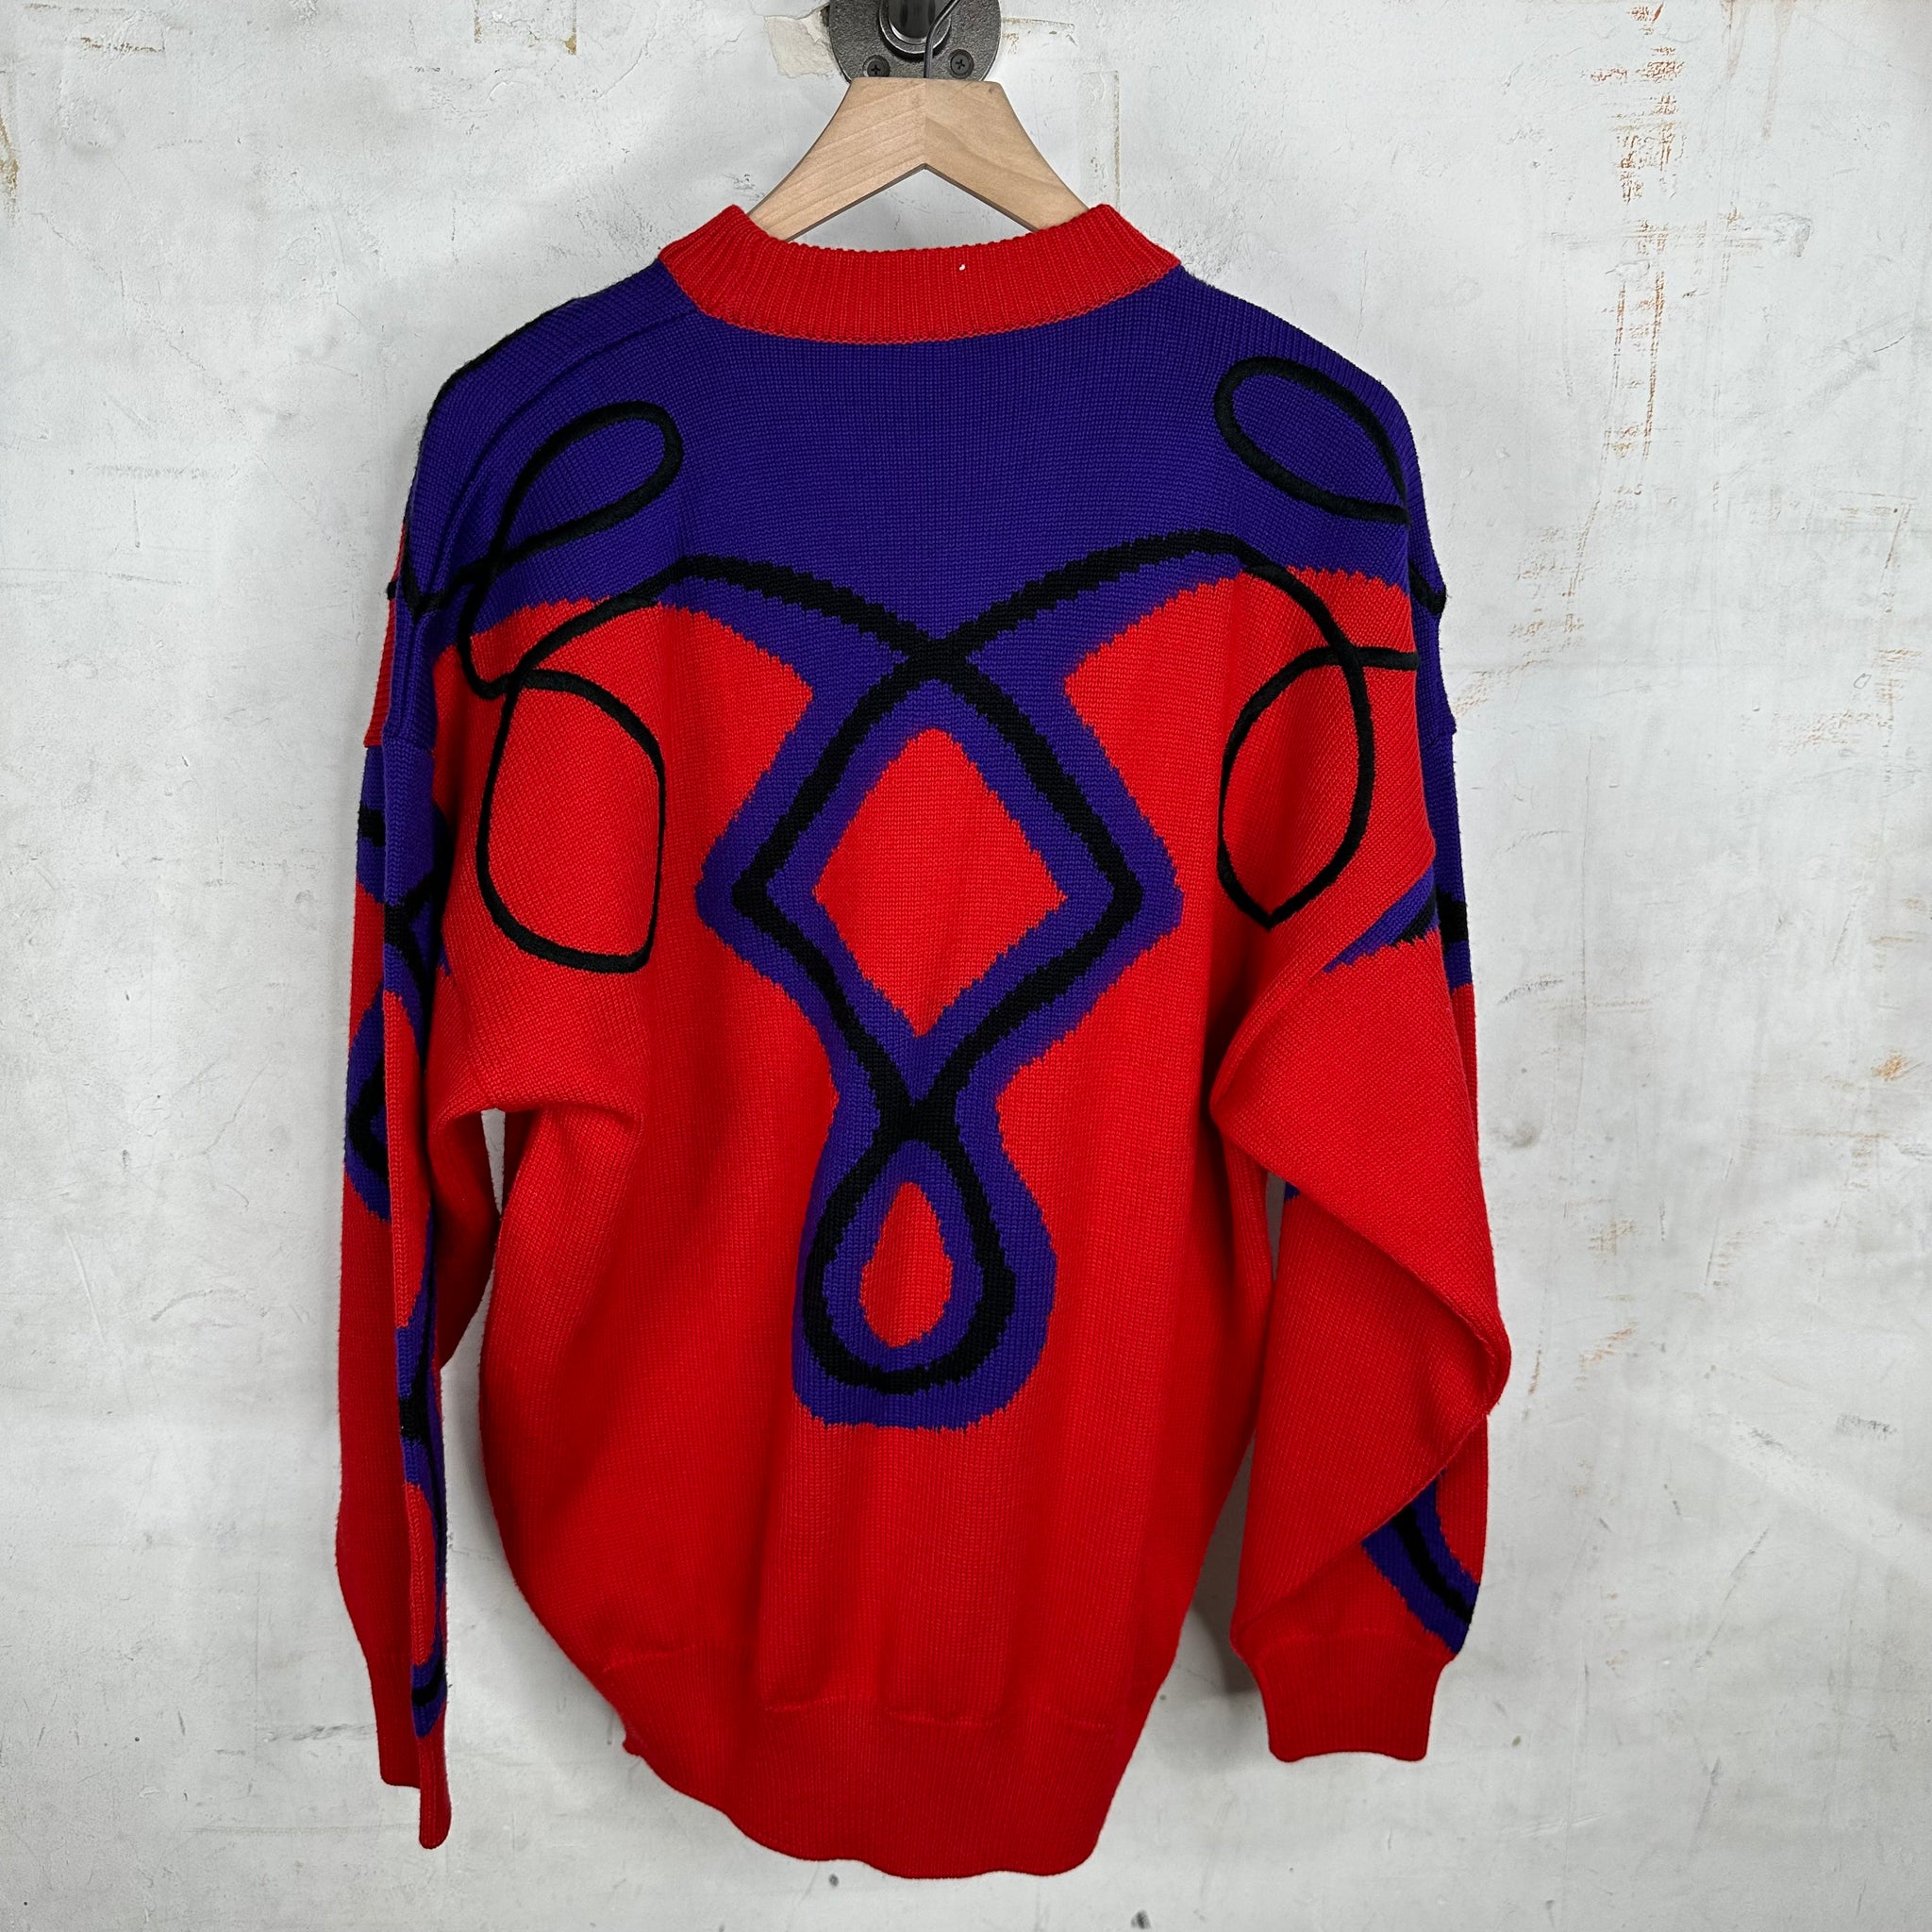 Vintage Versace Patterned Knit Sweater